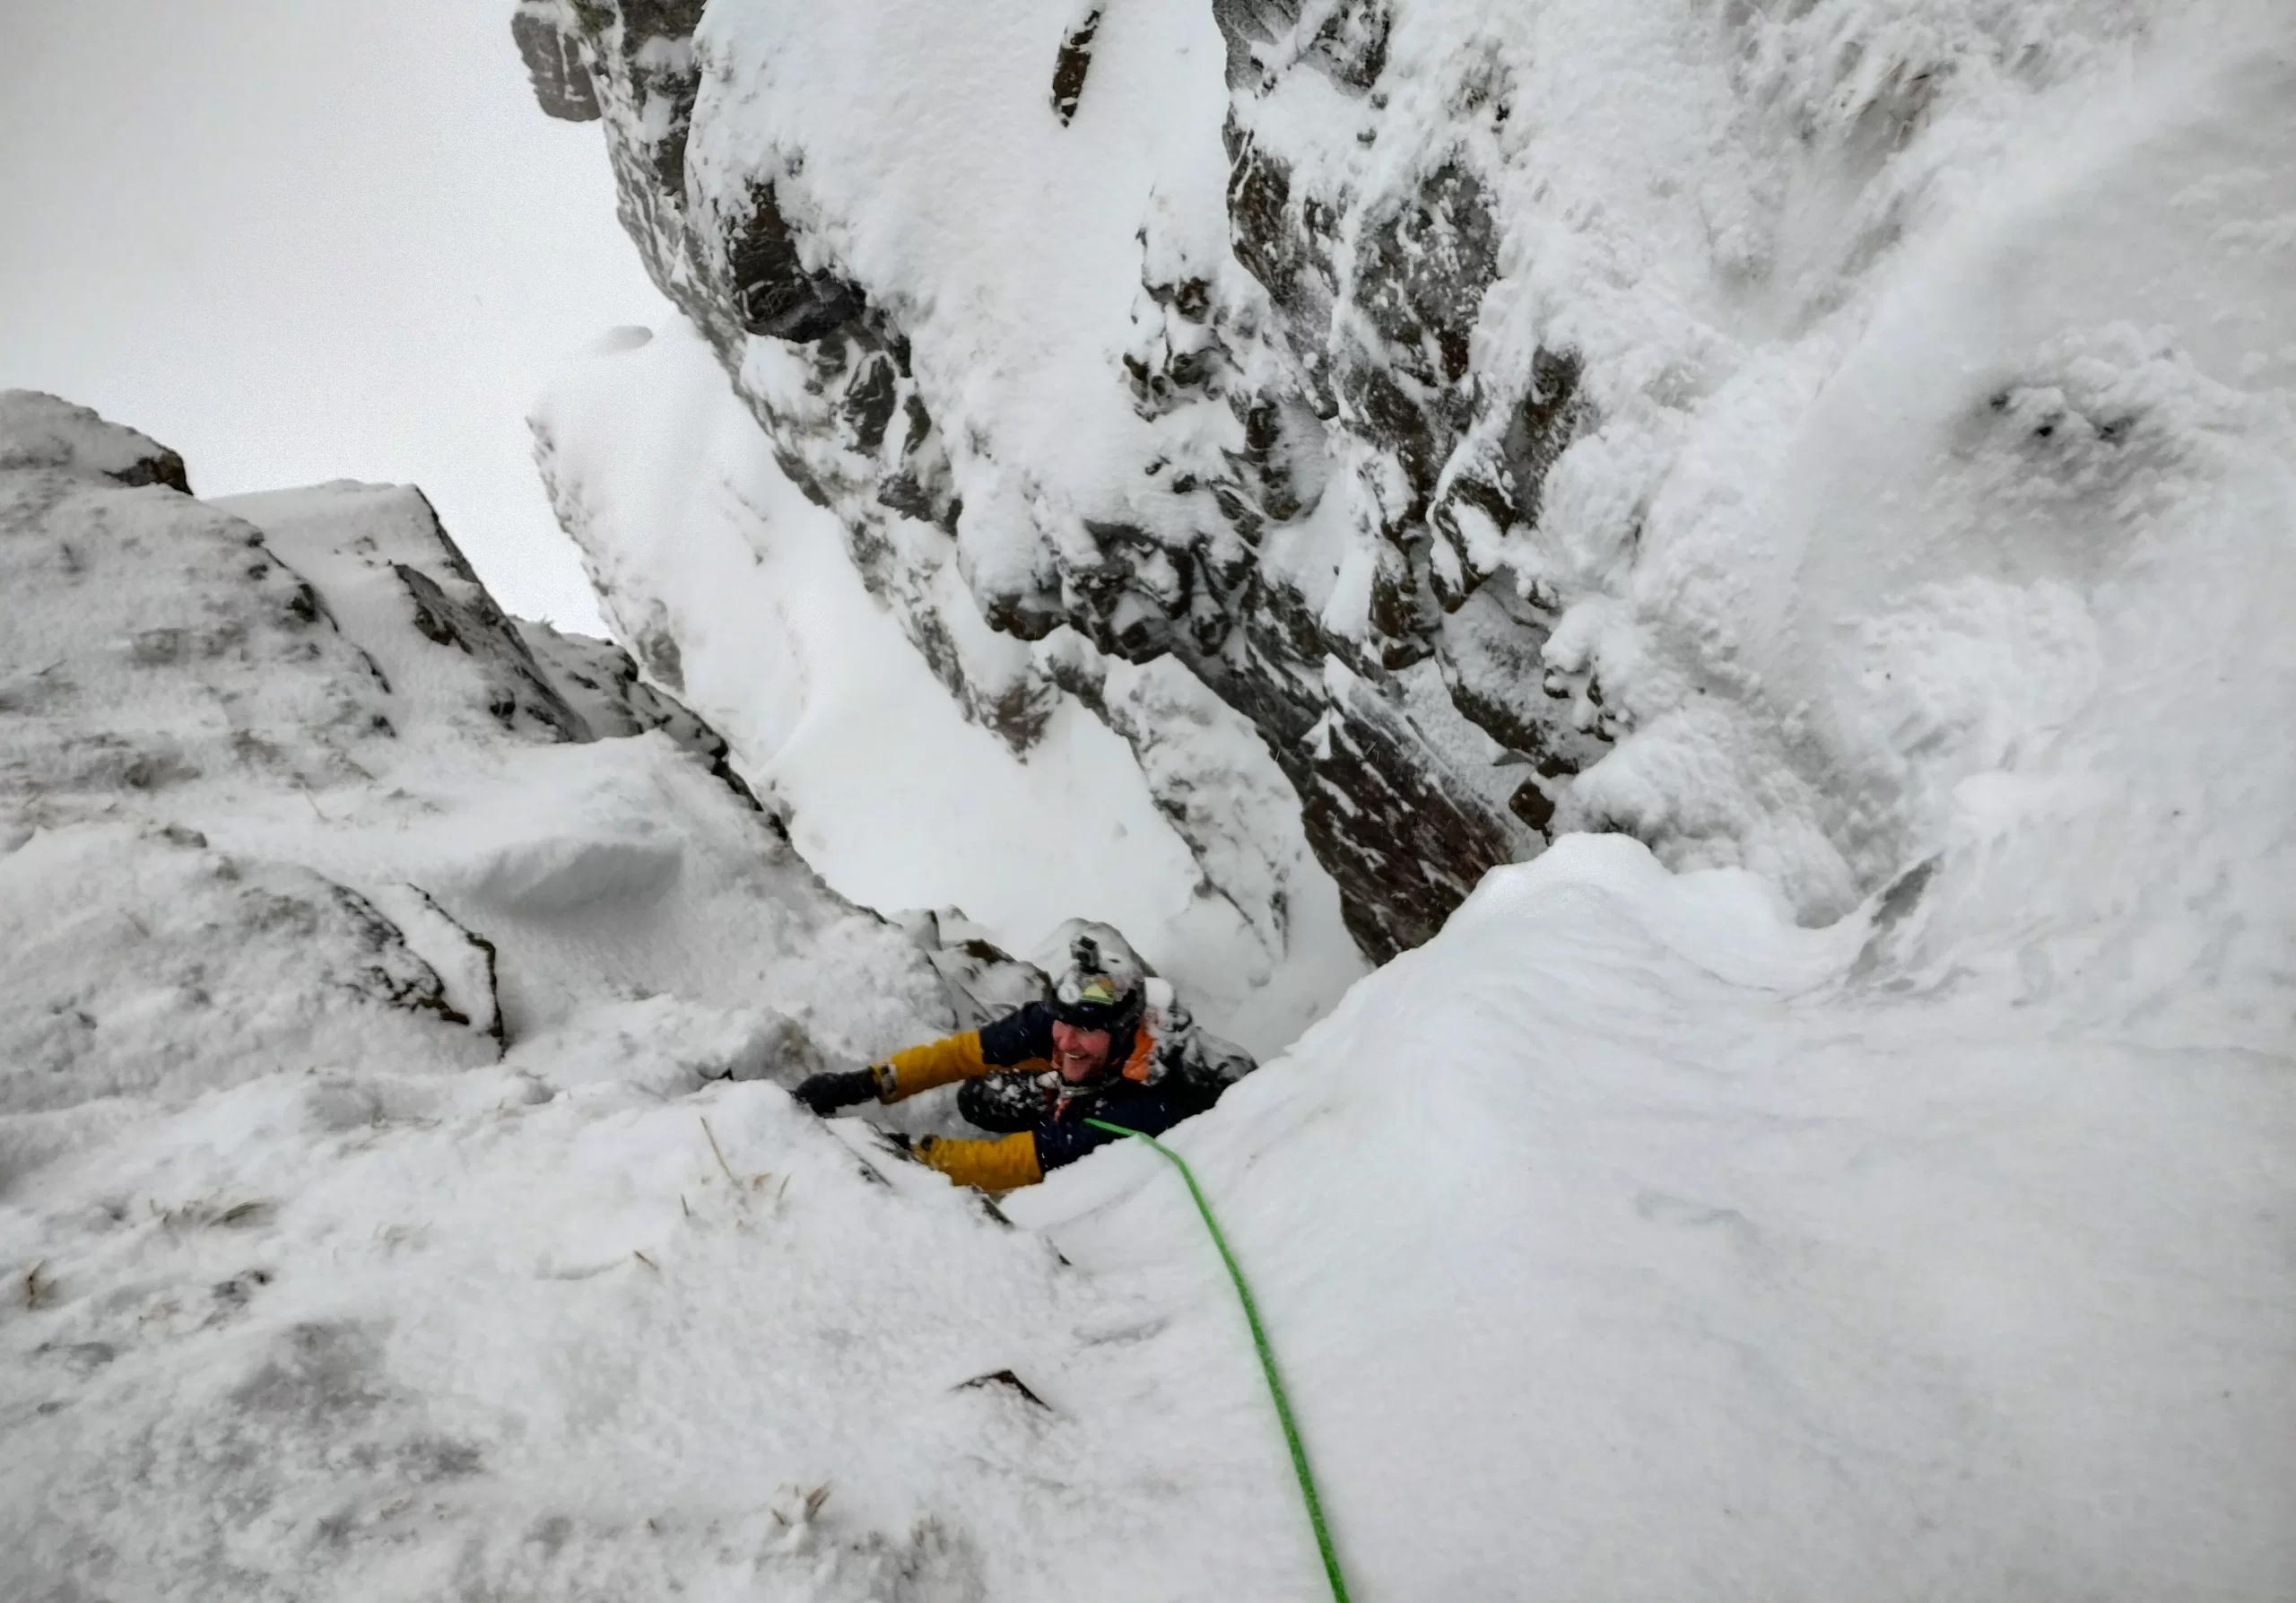 Climber smiling on a winter climb